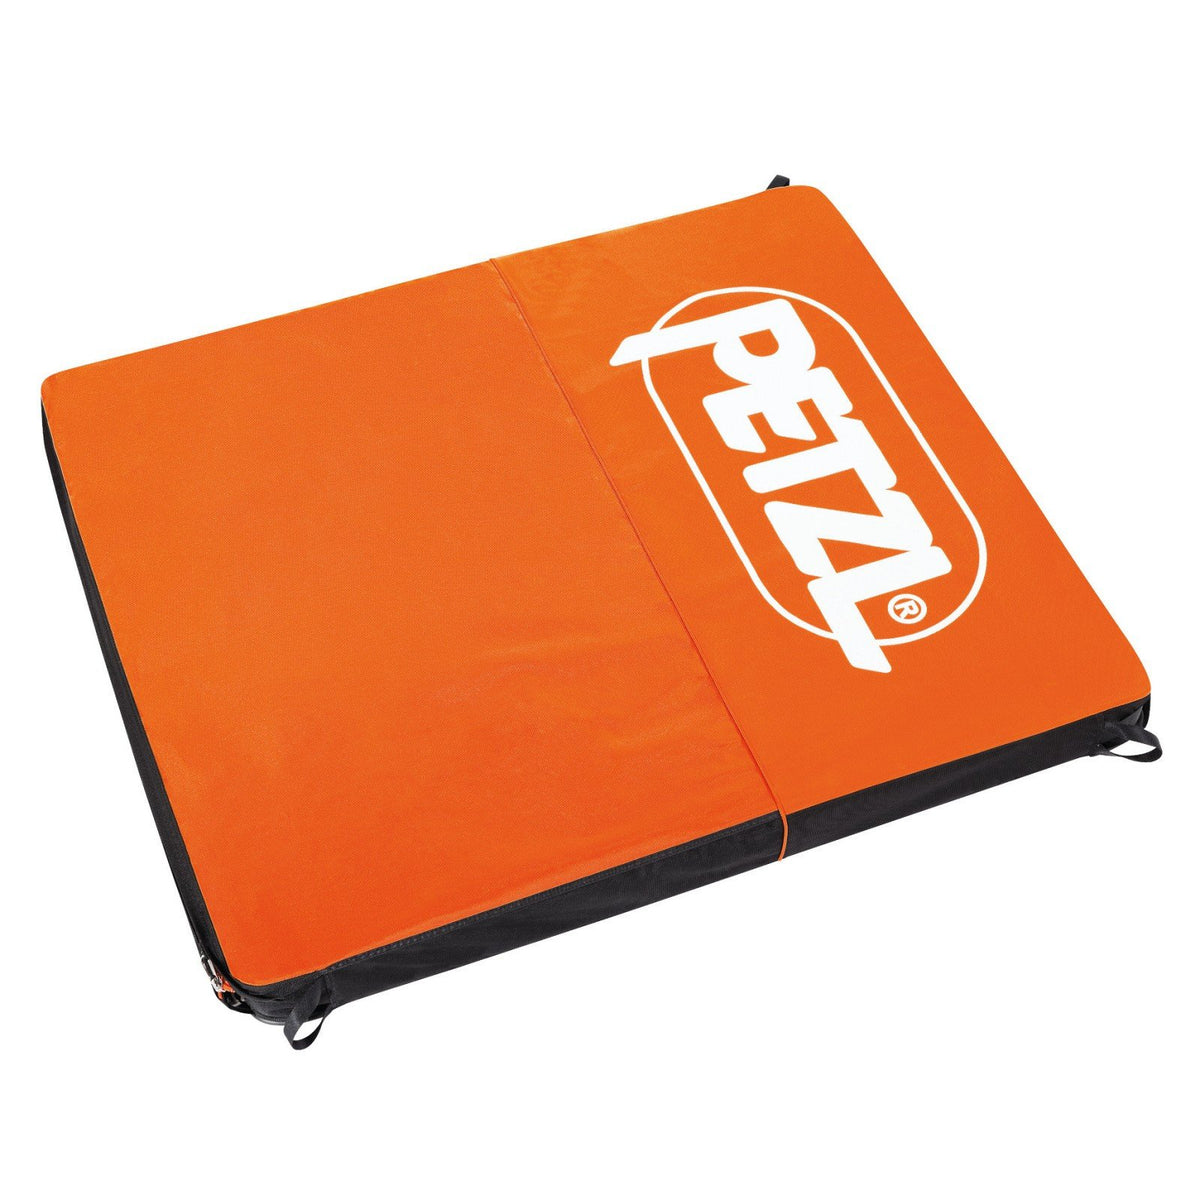 Petzl Alto bouldering crash pad, shown open laid flat, in orange colour with white brand logo